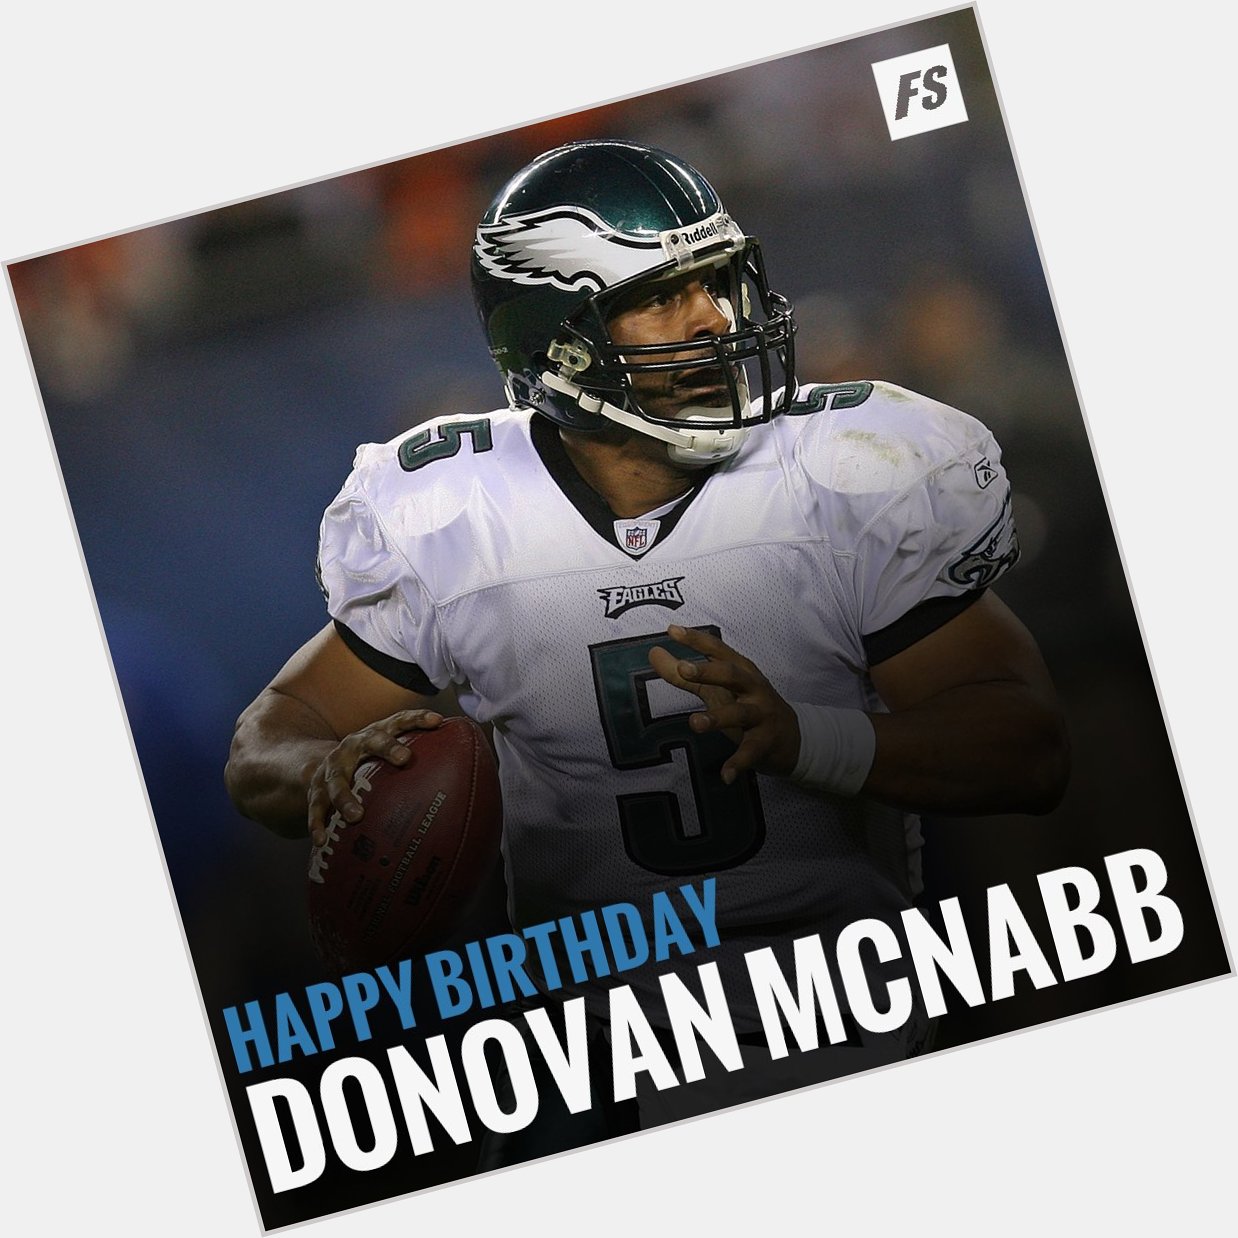 Happy Birthday to legend Donovan McNabb! 